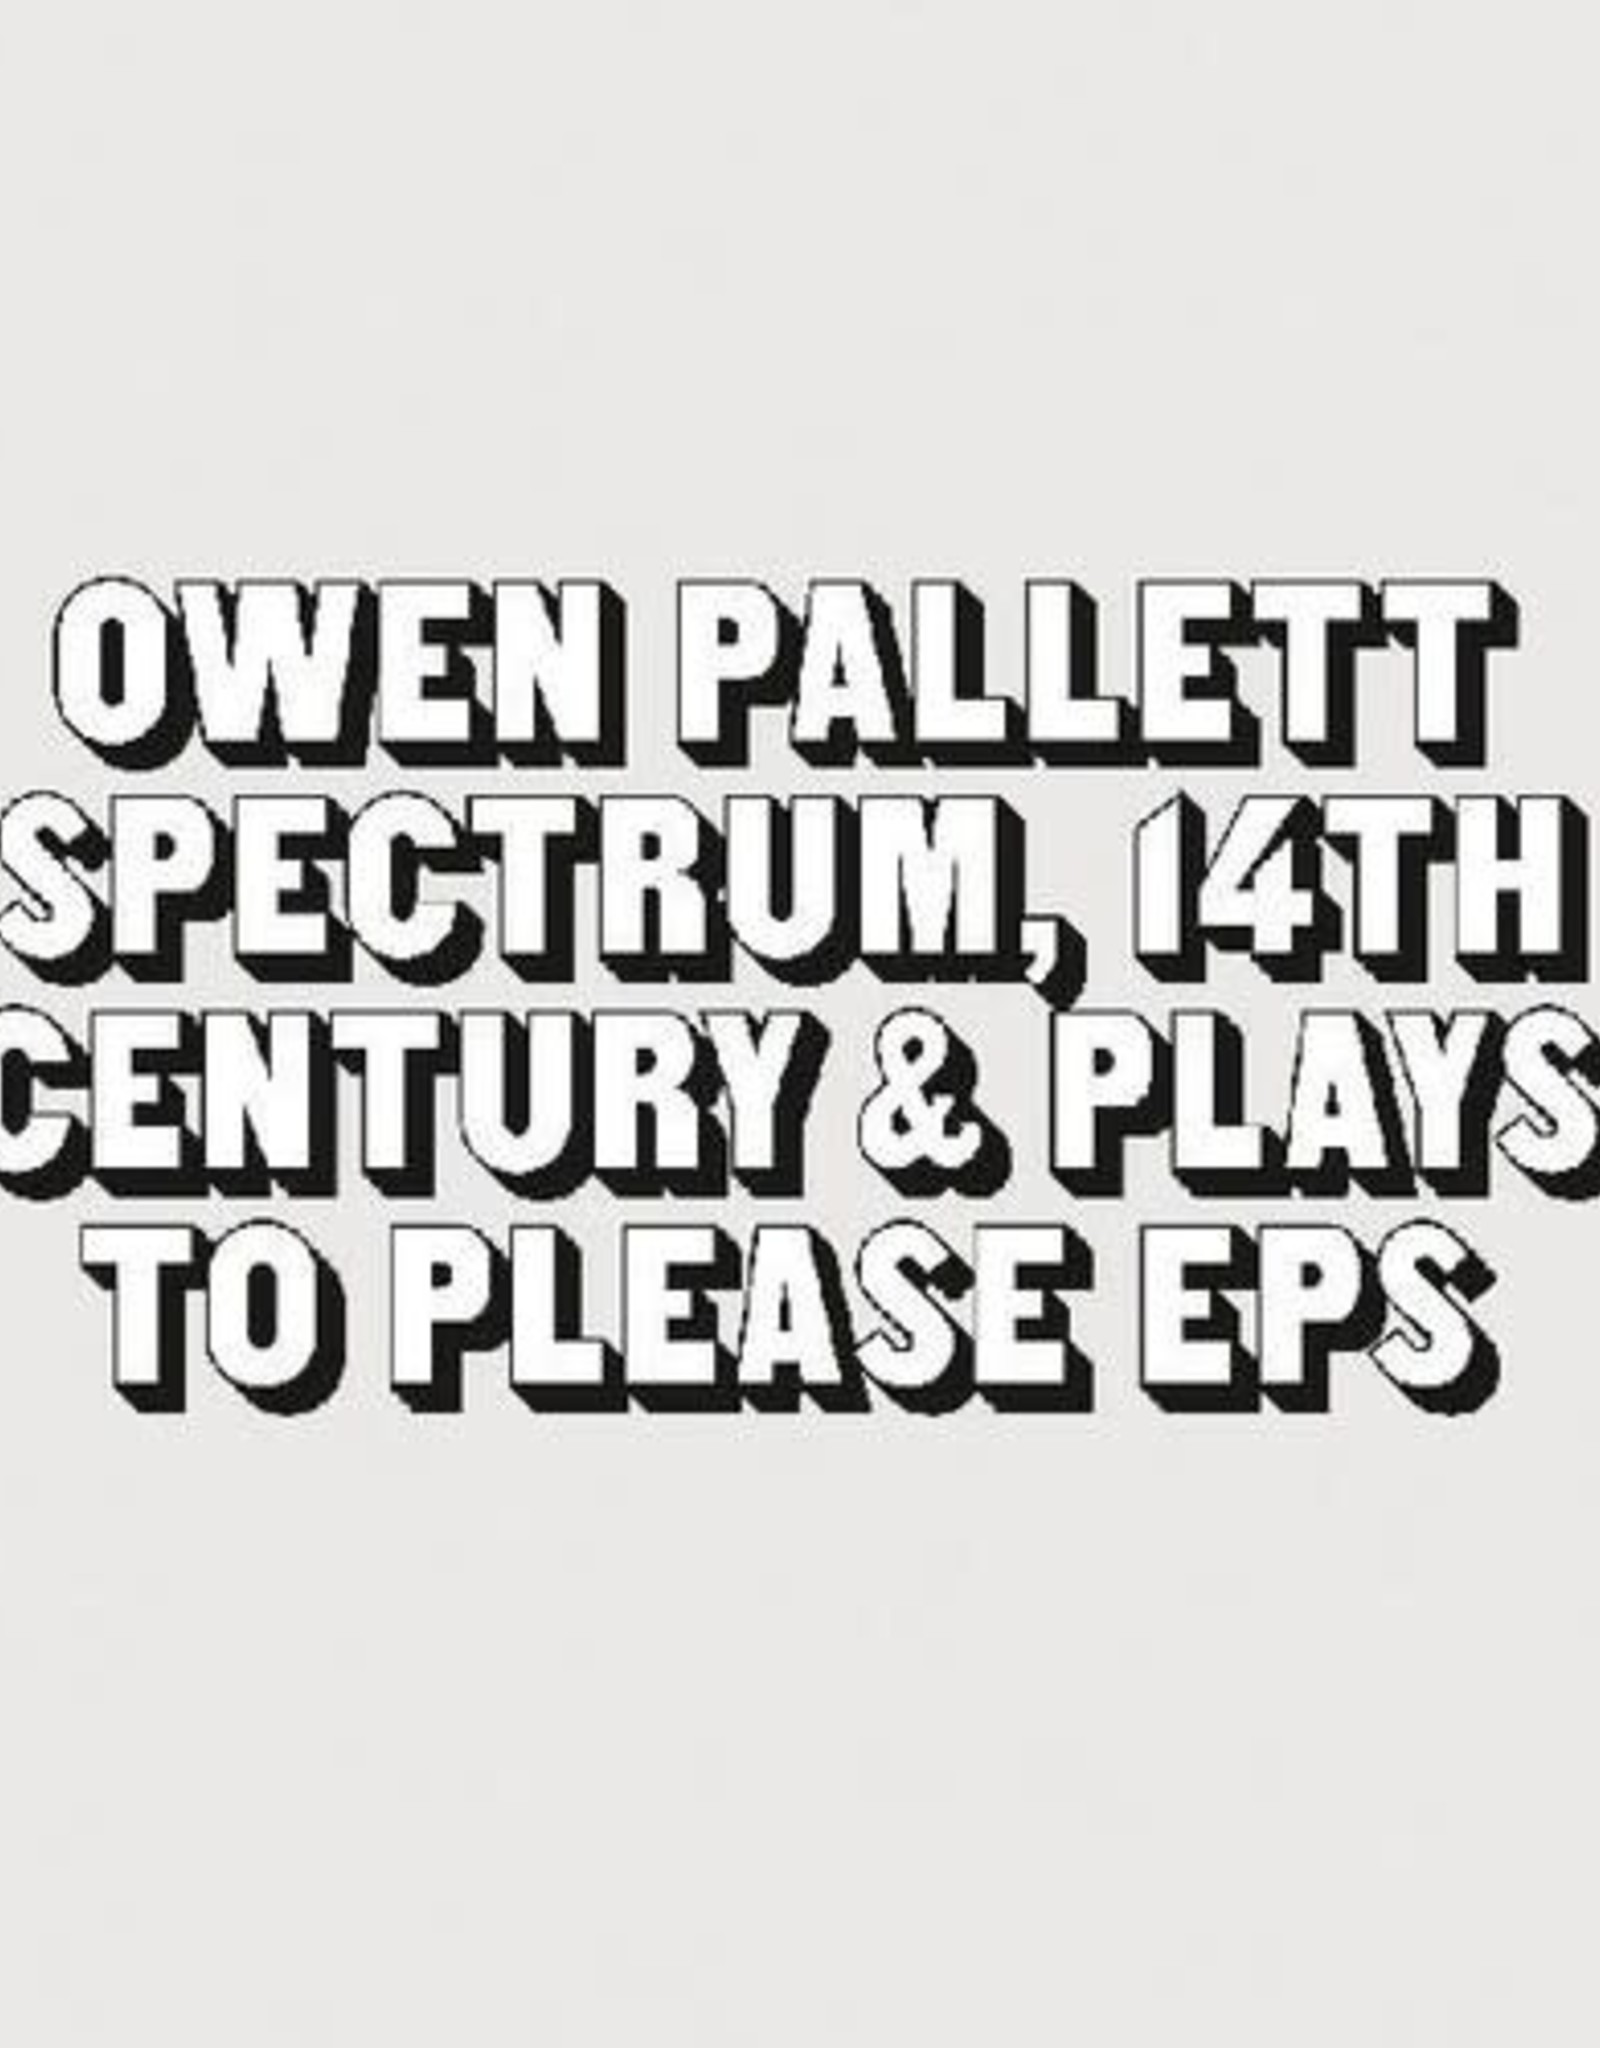 Owen Pallett - Spectrum, 14th Century and Plays to Please EPs